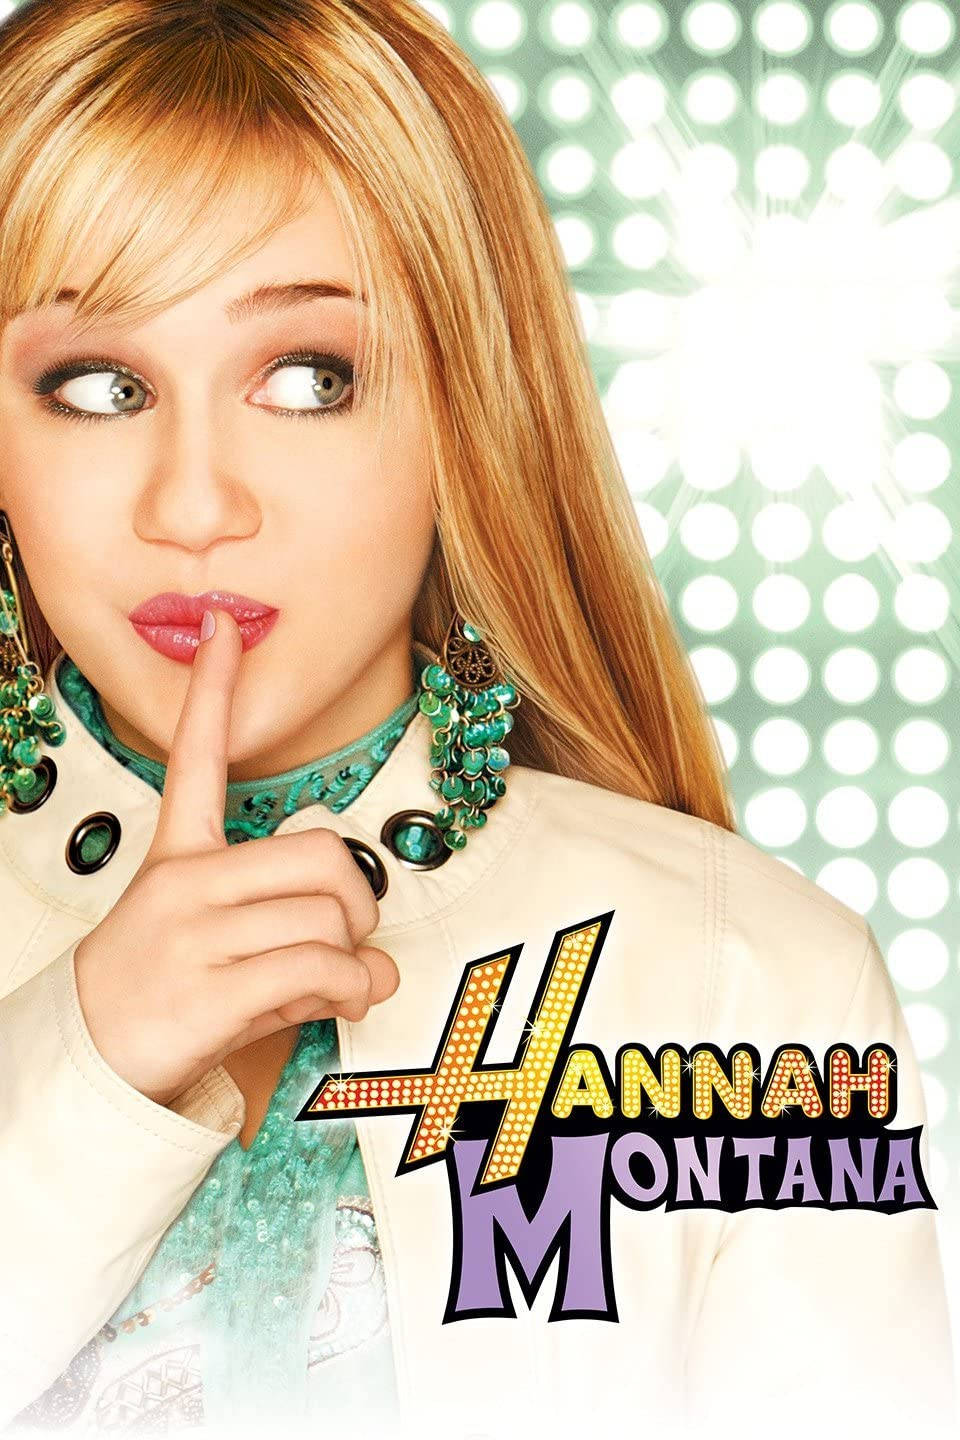 Hannah Montana Iconic Pose Wallpaper